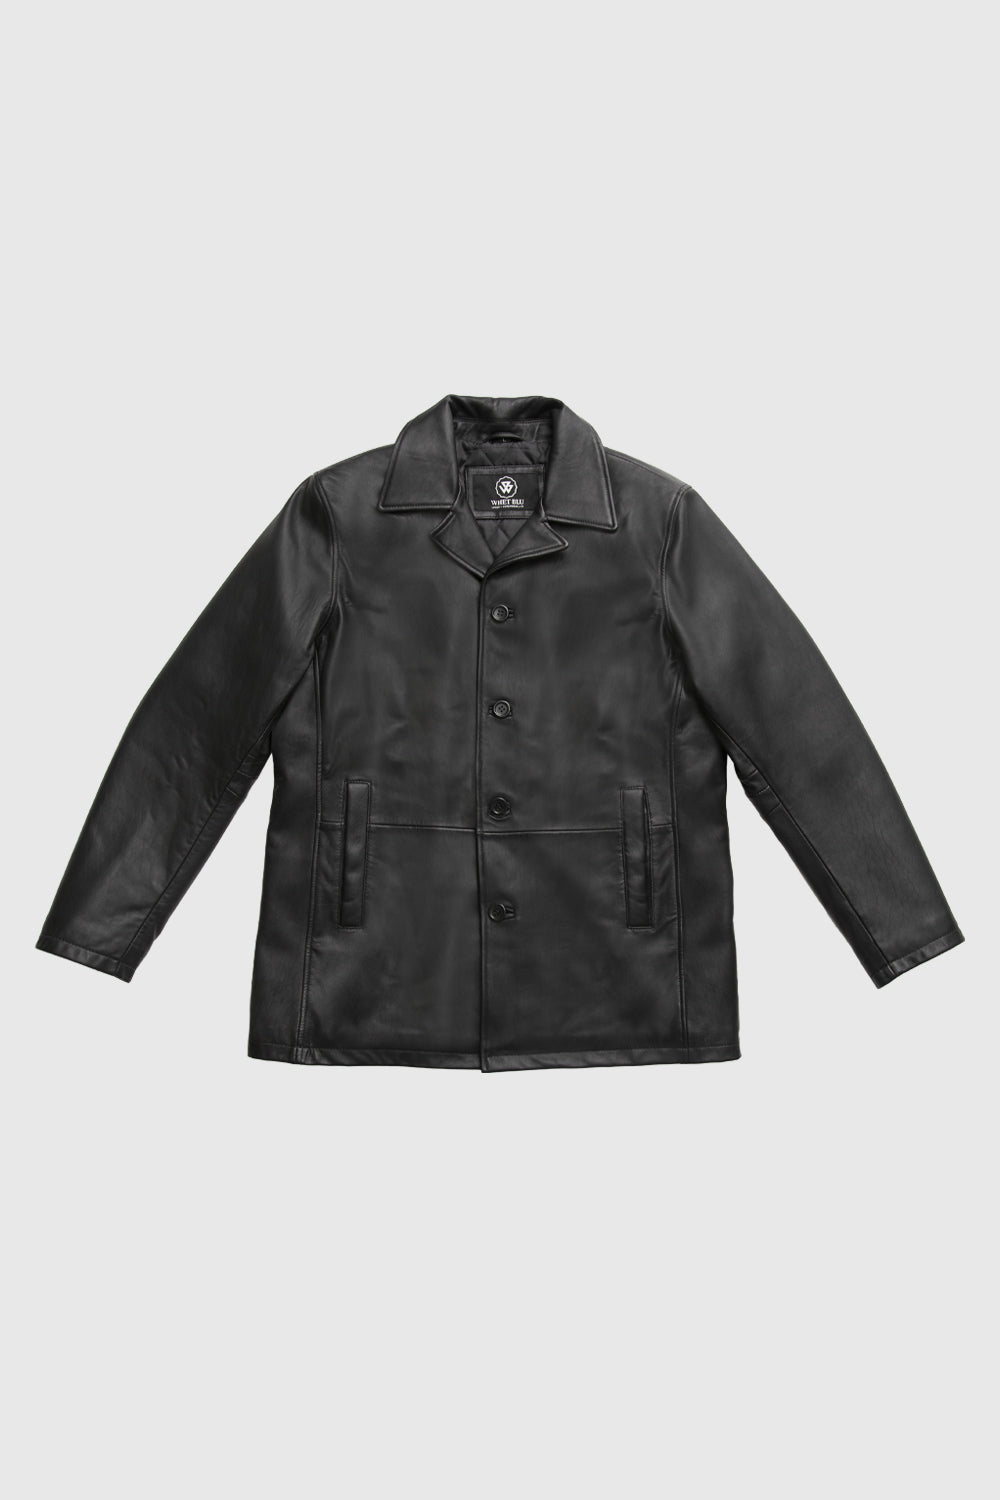 Strata Men's Fashion Leather Jacket (POS) Men's New Zealand Lambskin Jacket Whet Blu NYC   